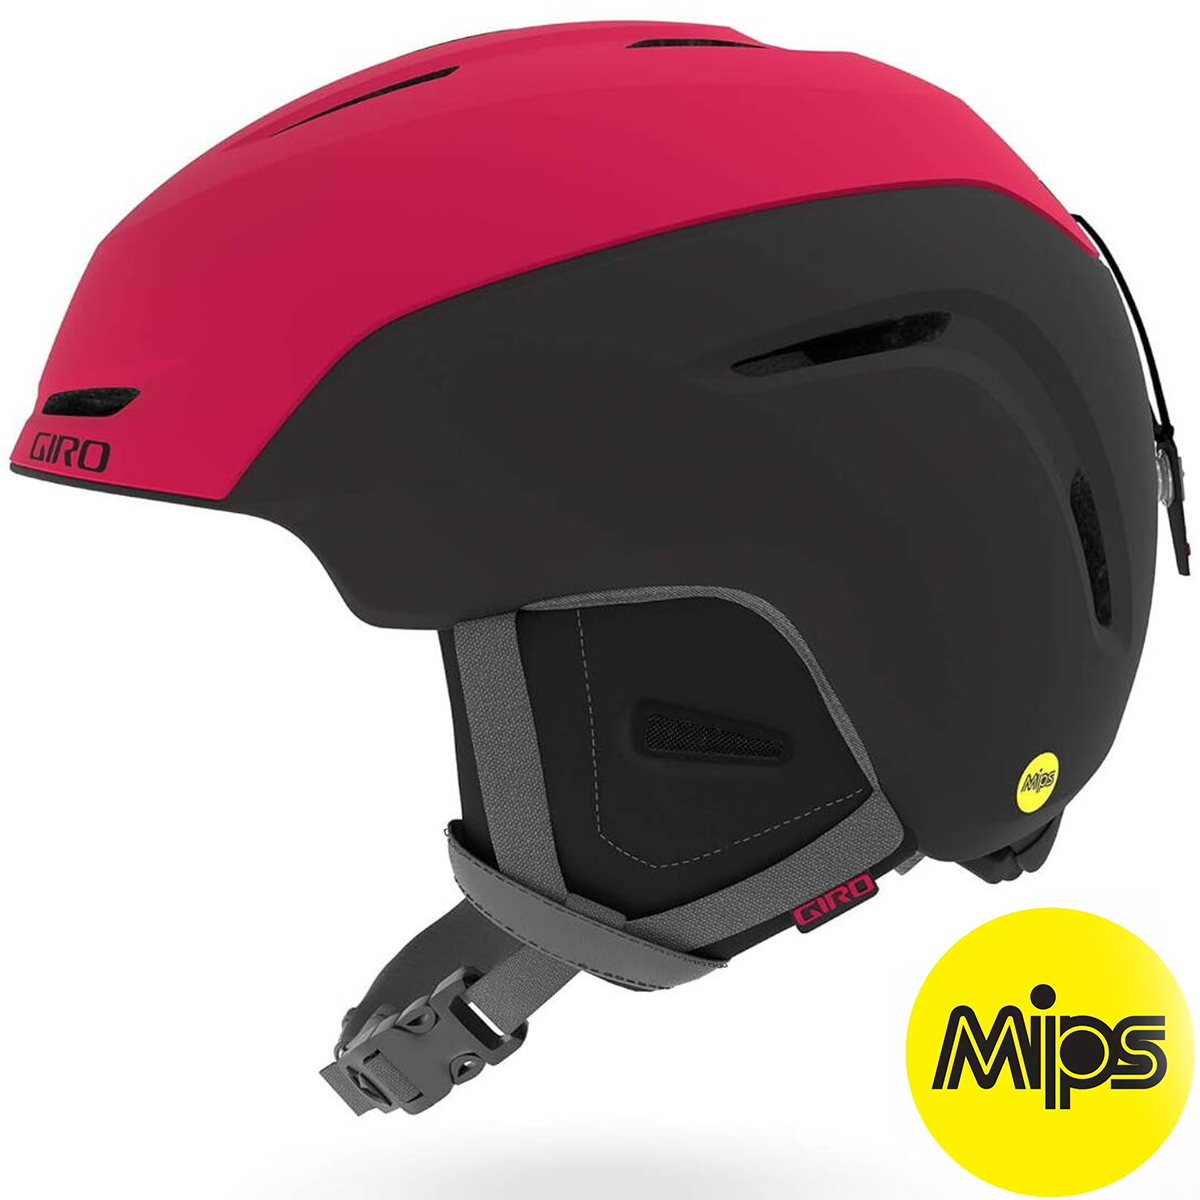 Giro Neo Jr. MIPS Kids Ski Helmet - Snowboard Helmet for Youth